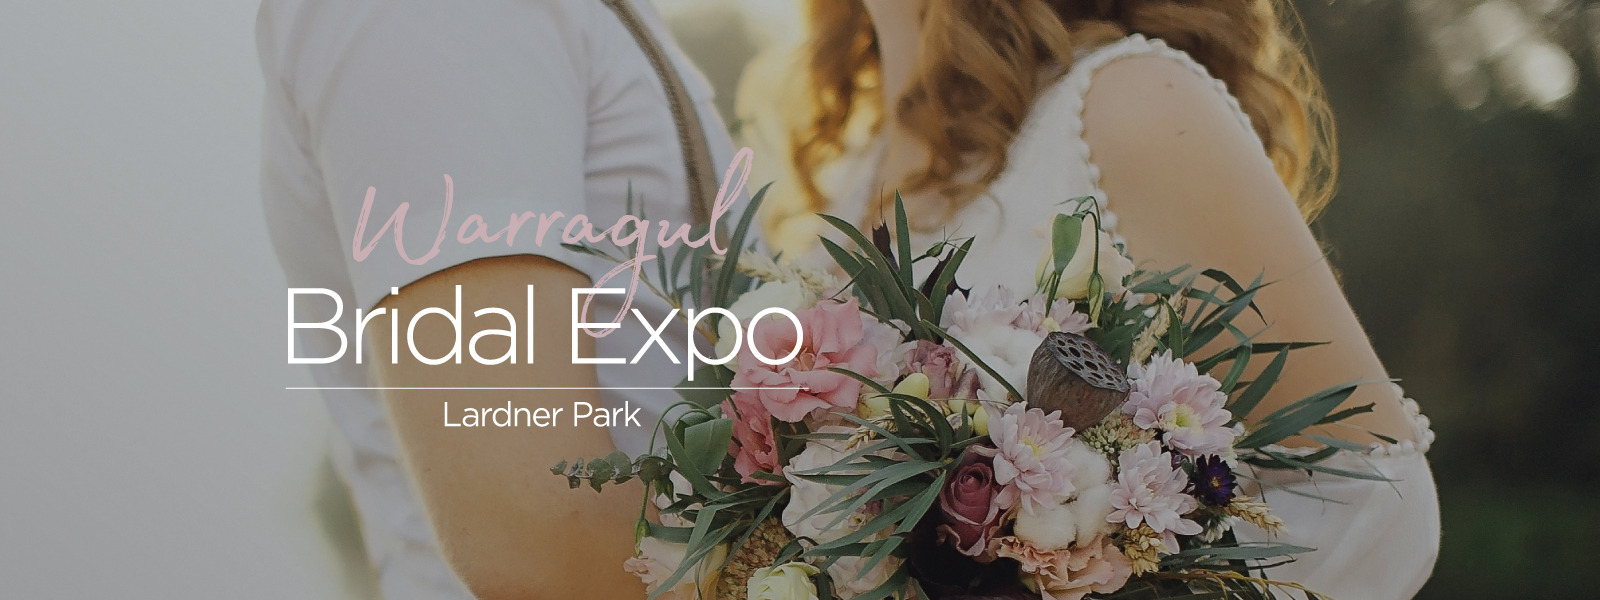 Warragul Bridal Expo January 2022